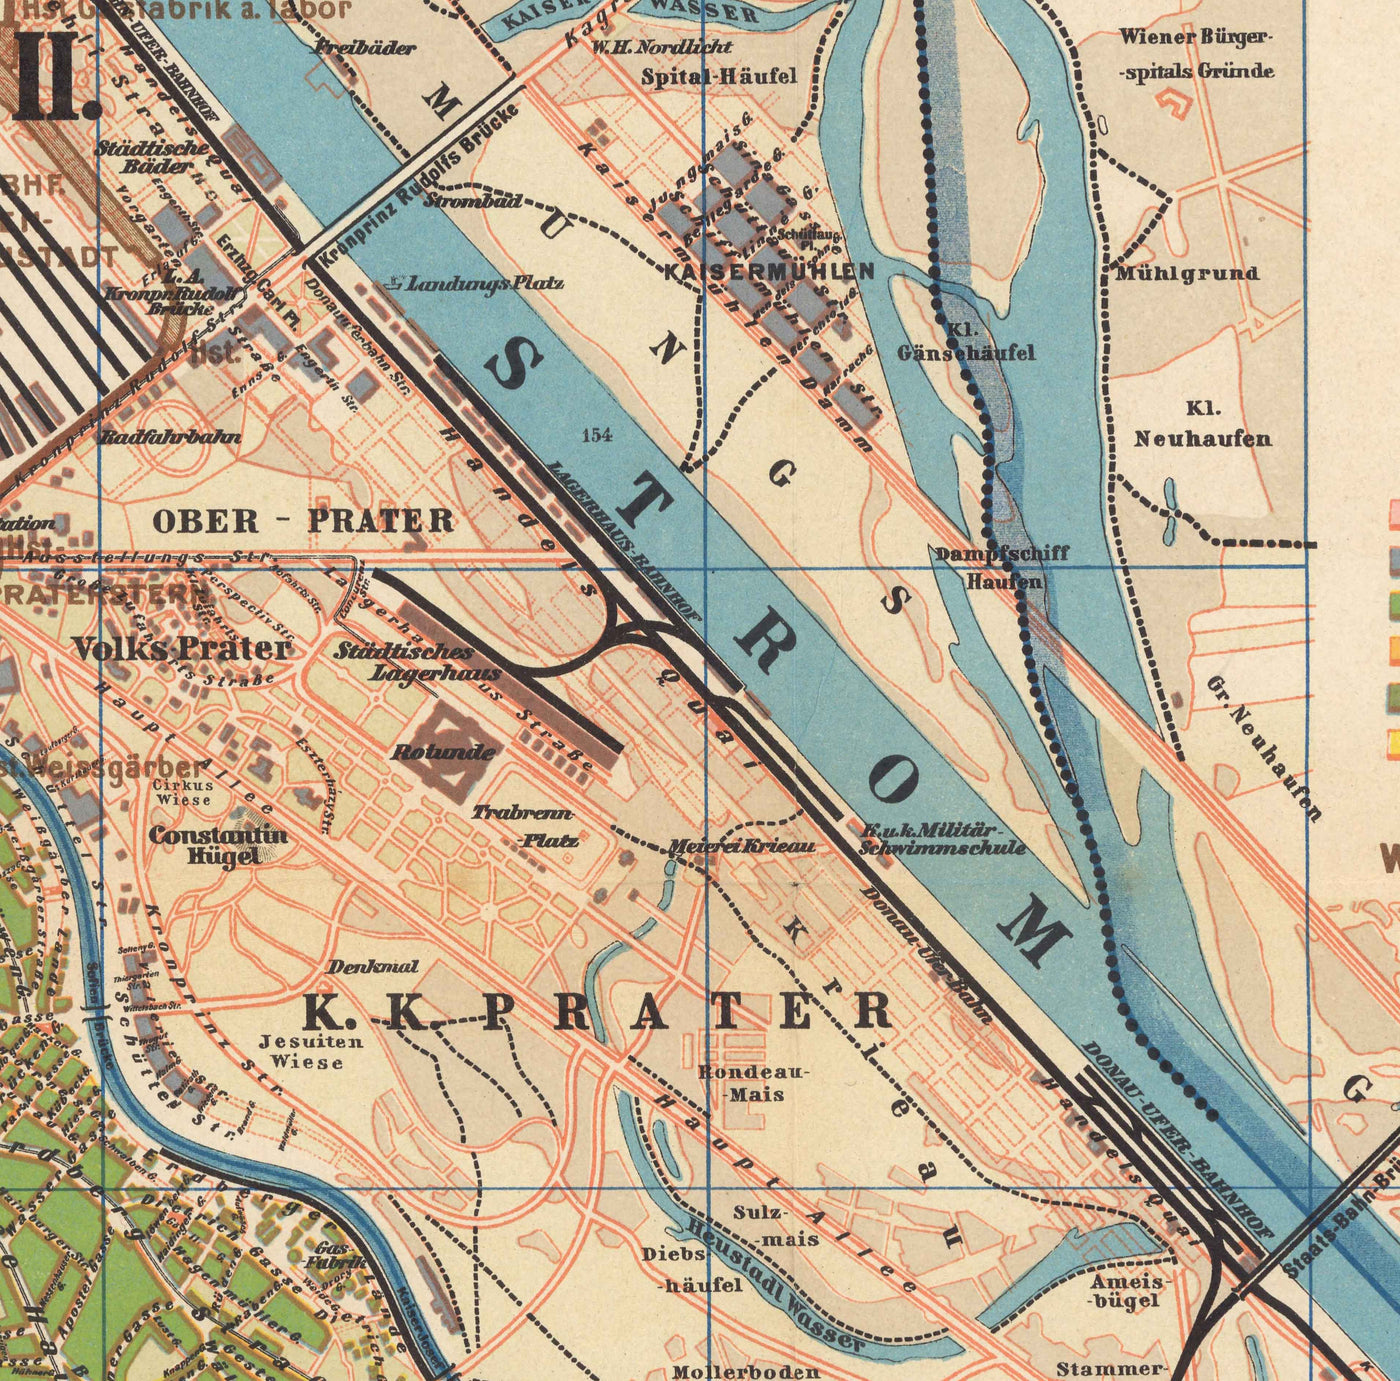 Ancienne carte de Vienne par Gustav Freytag en 1895 - Innere Stadt, Leopoldstadt, Wieden, Margareten, Landstraße